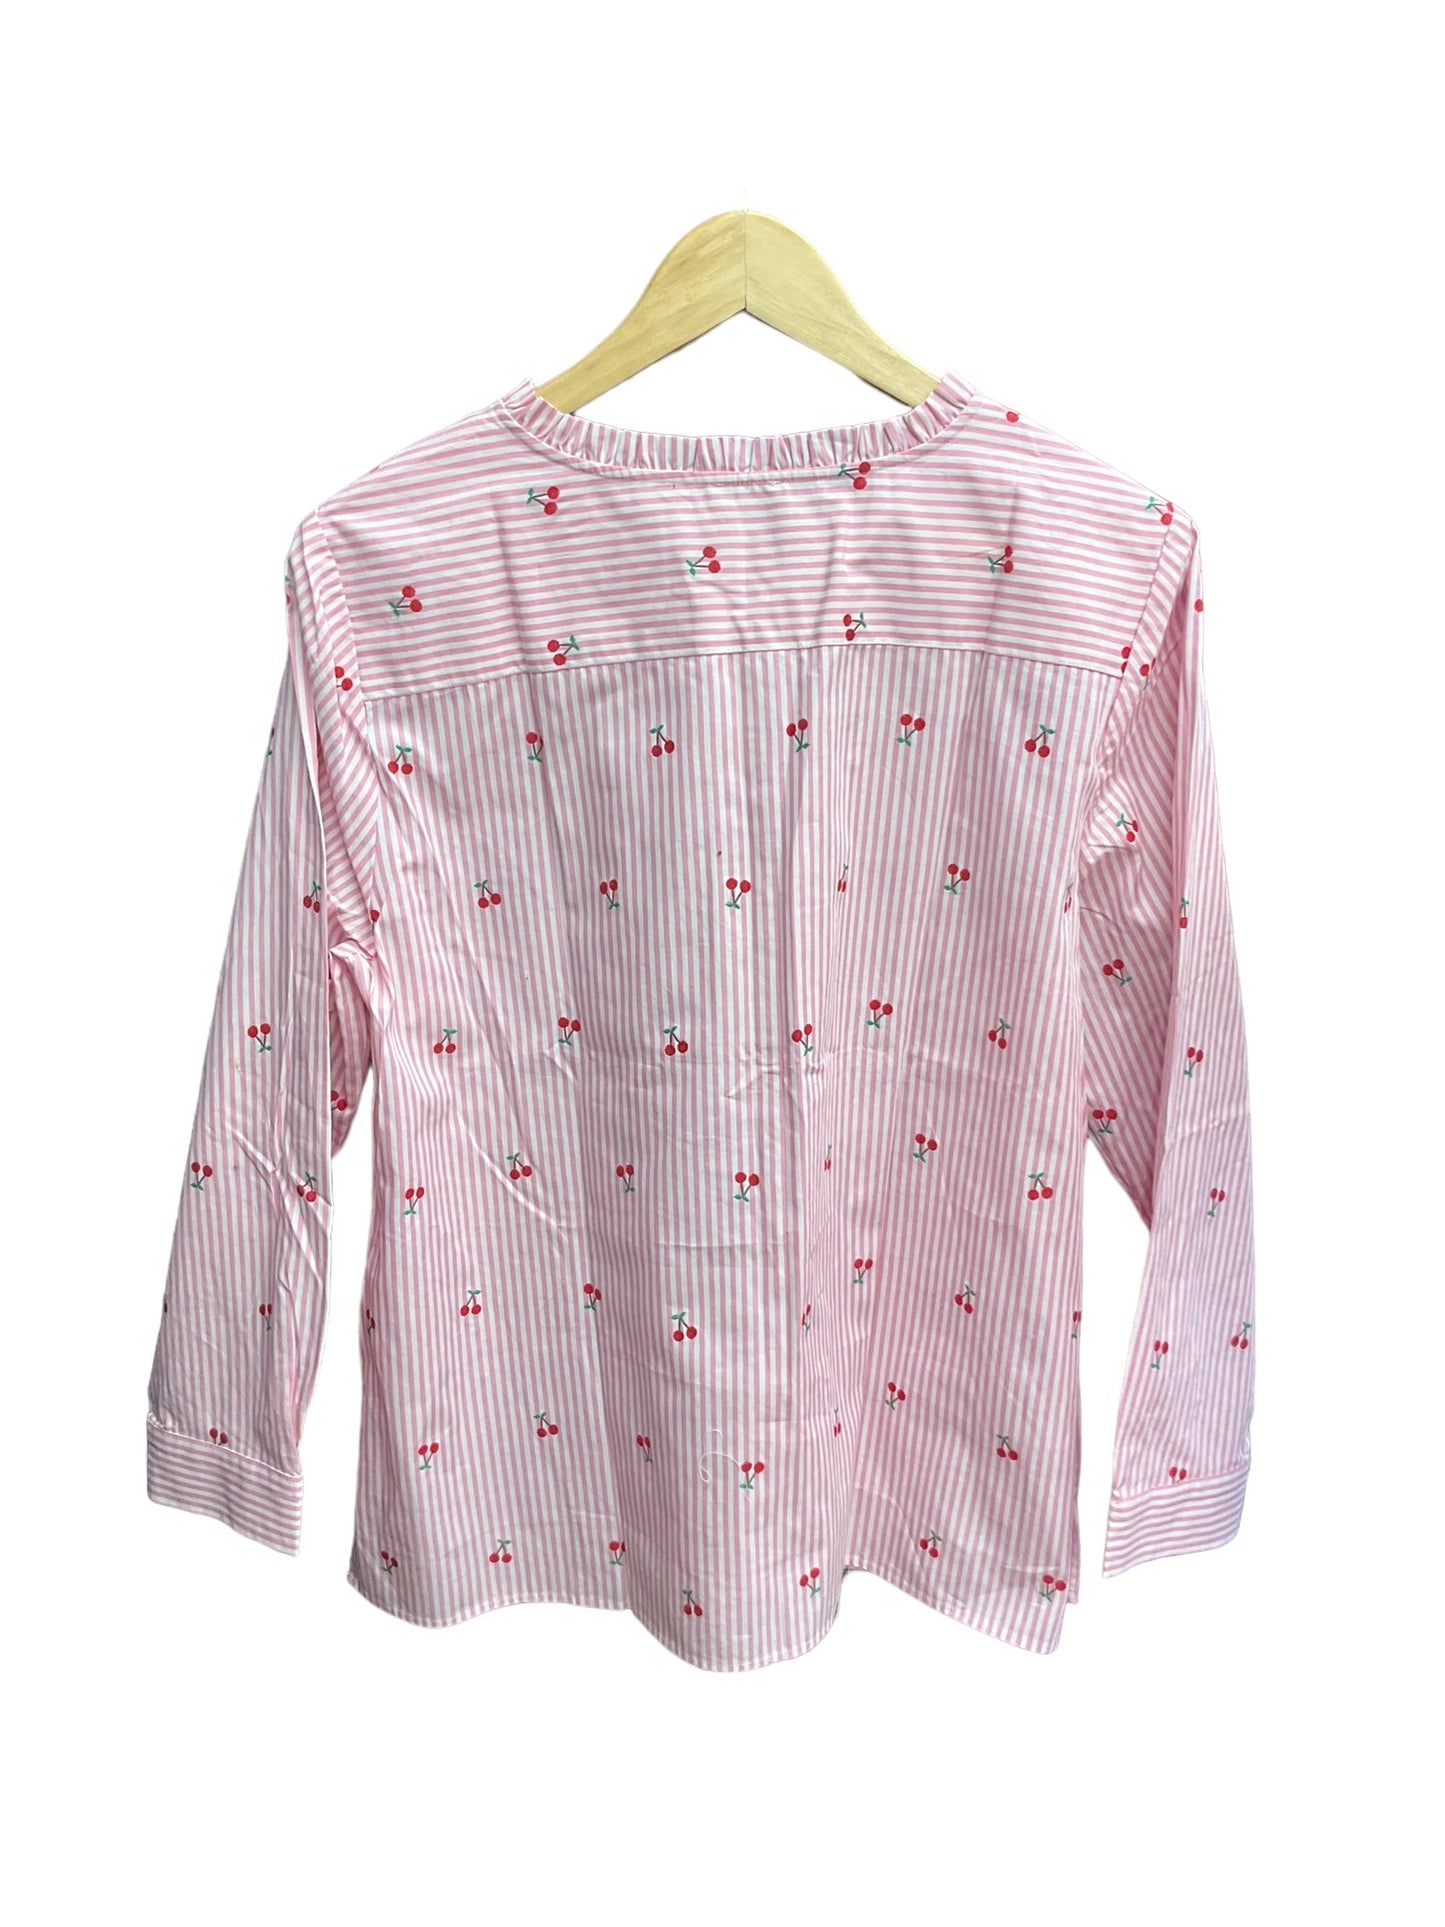 Pink & White Blouse Long Sleeve Talbots, Size Xl